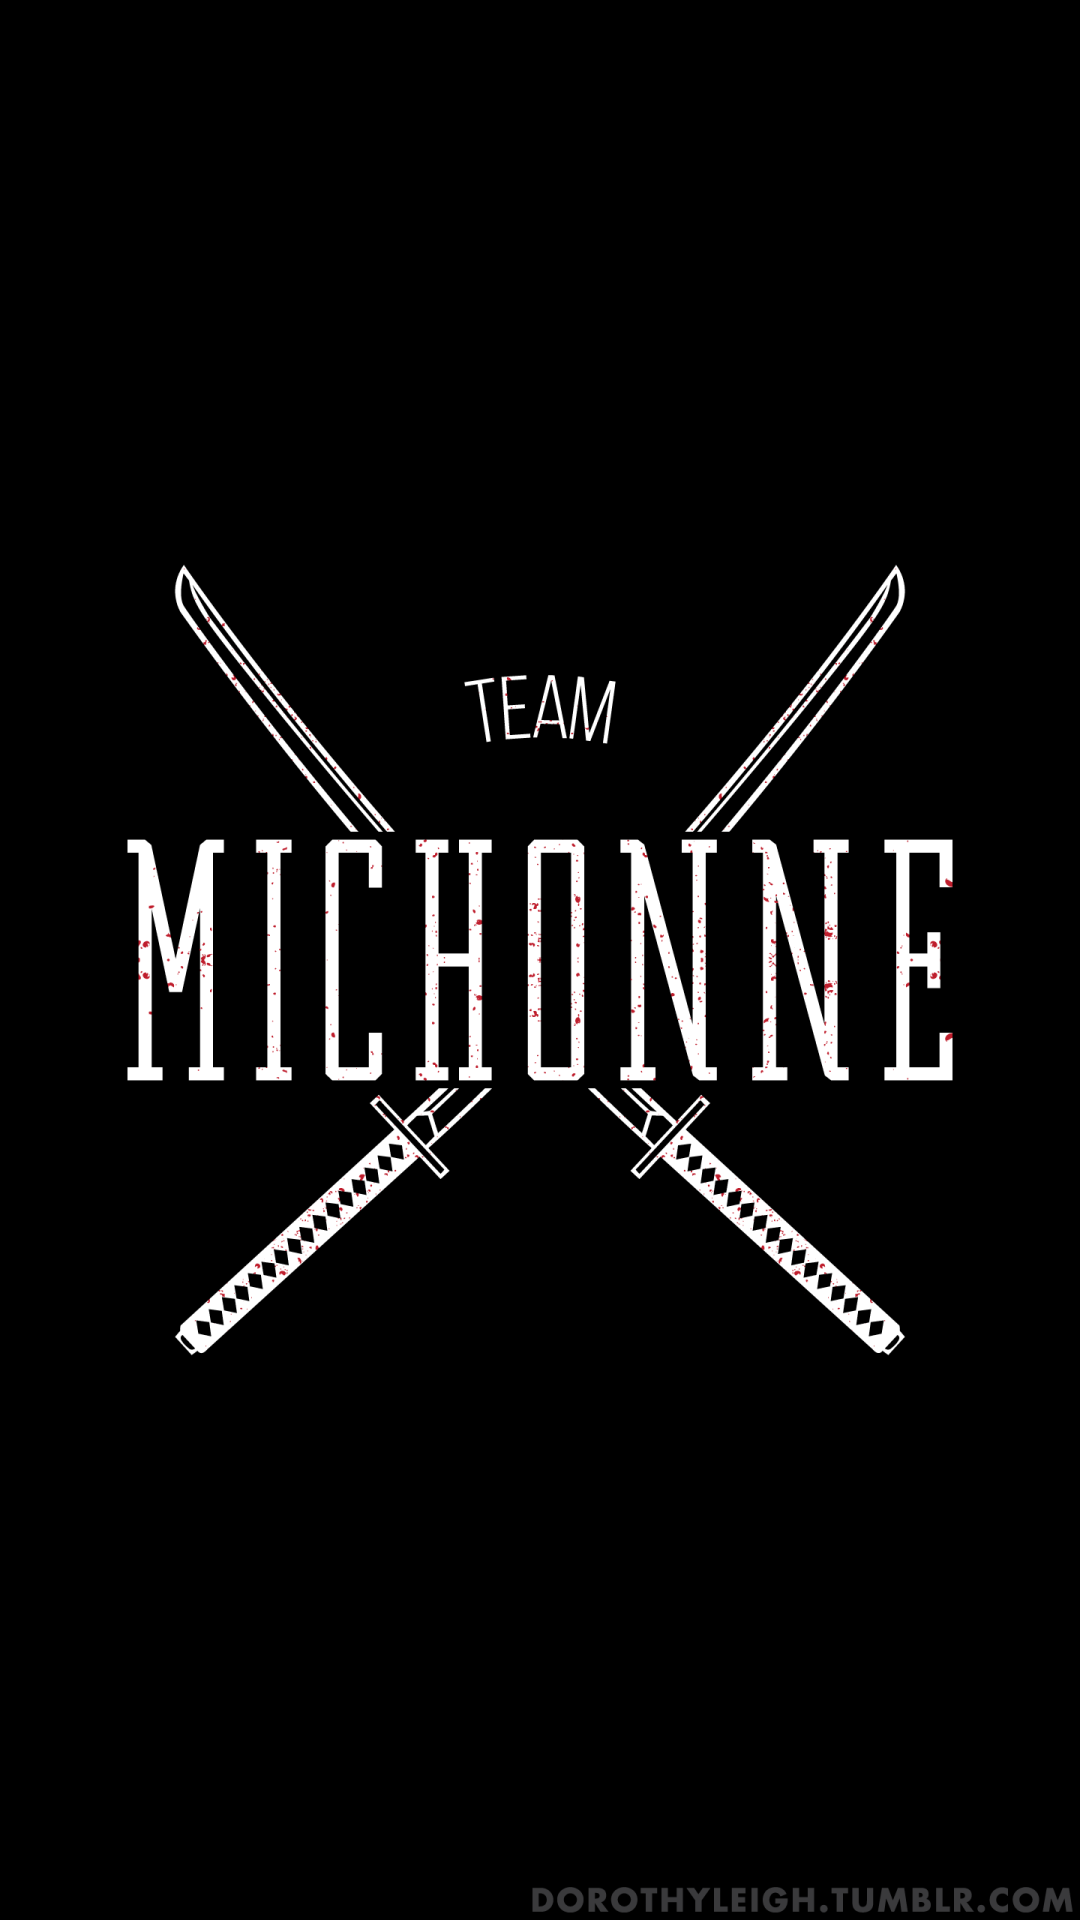 Team Michonne Wallpaper Prints Available Below